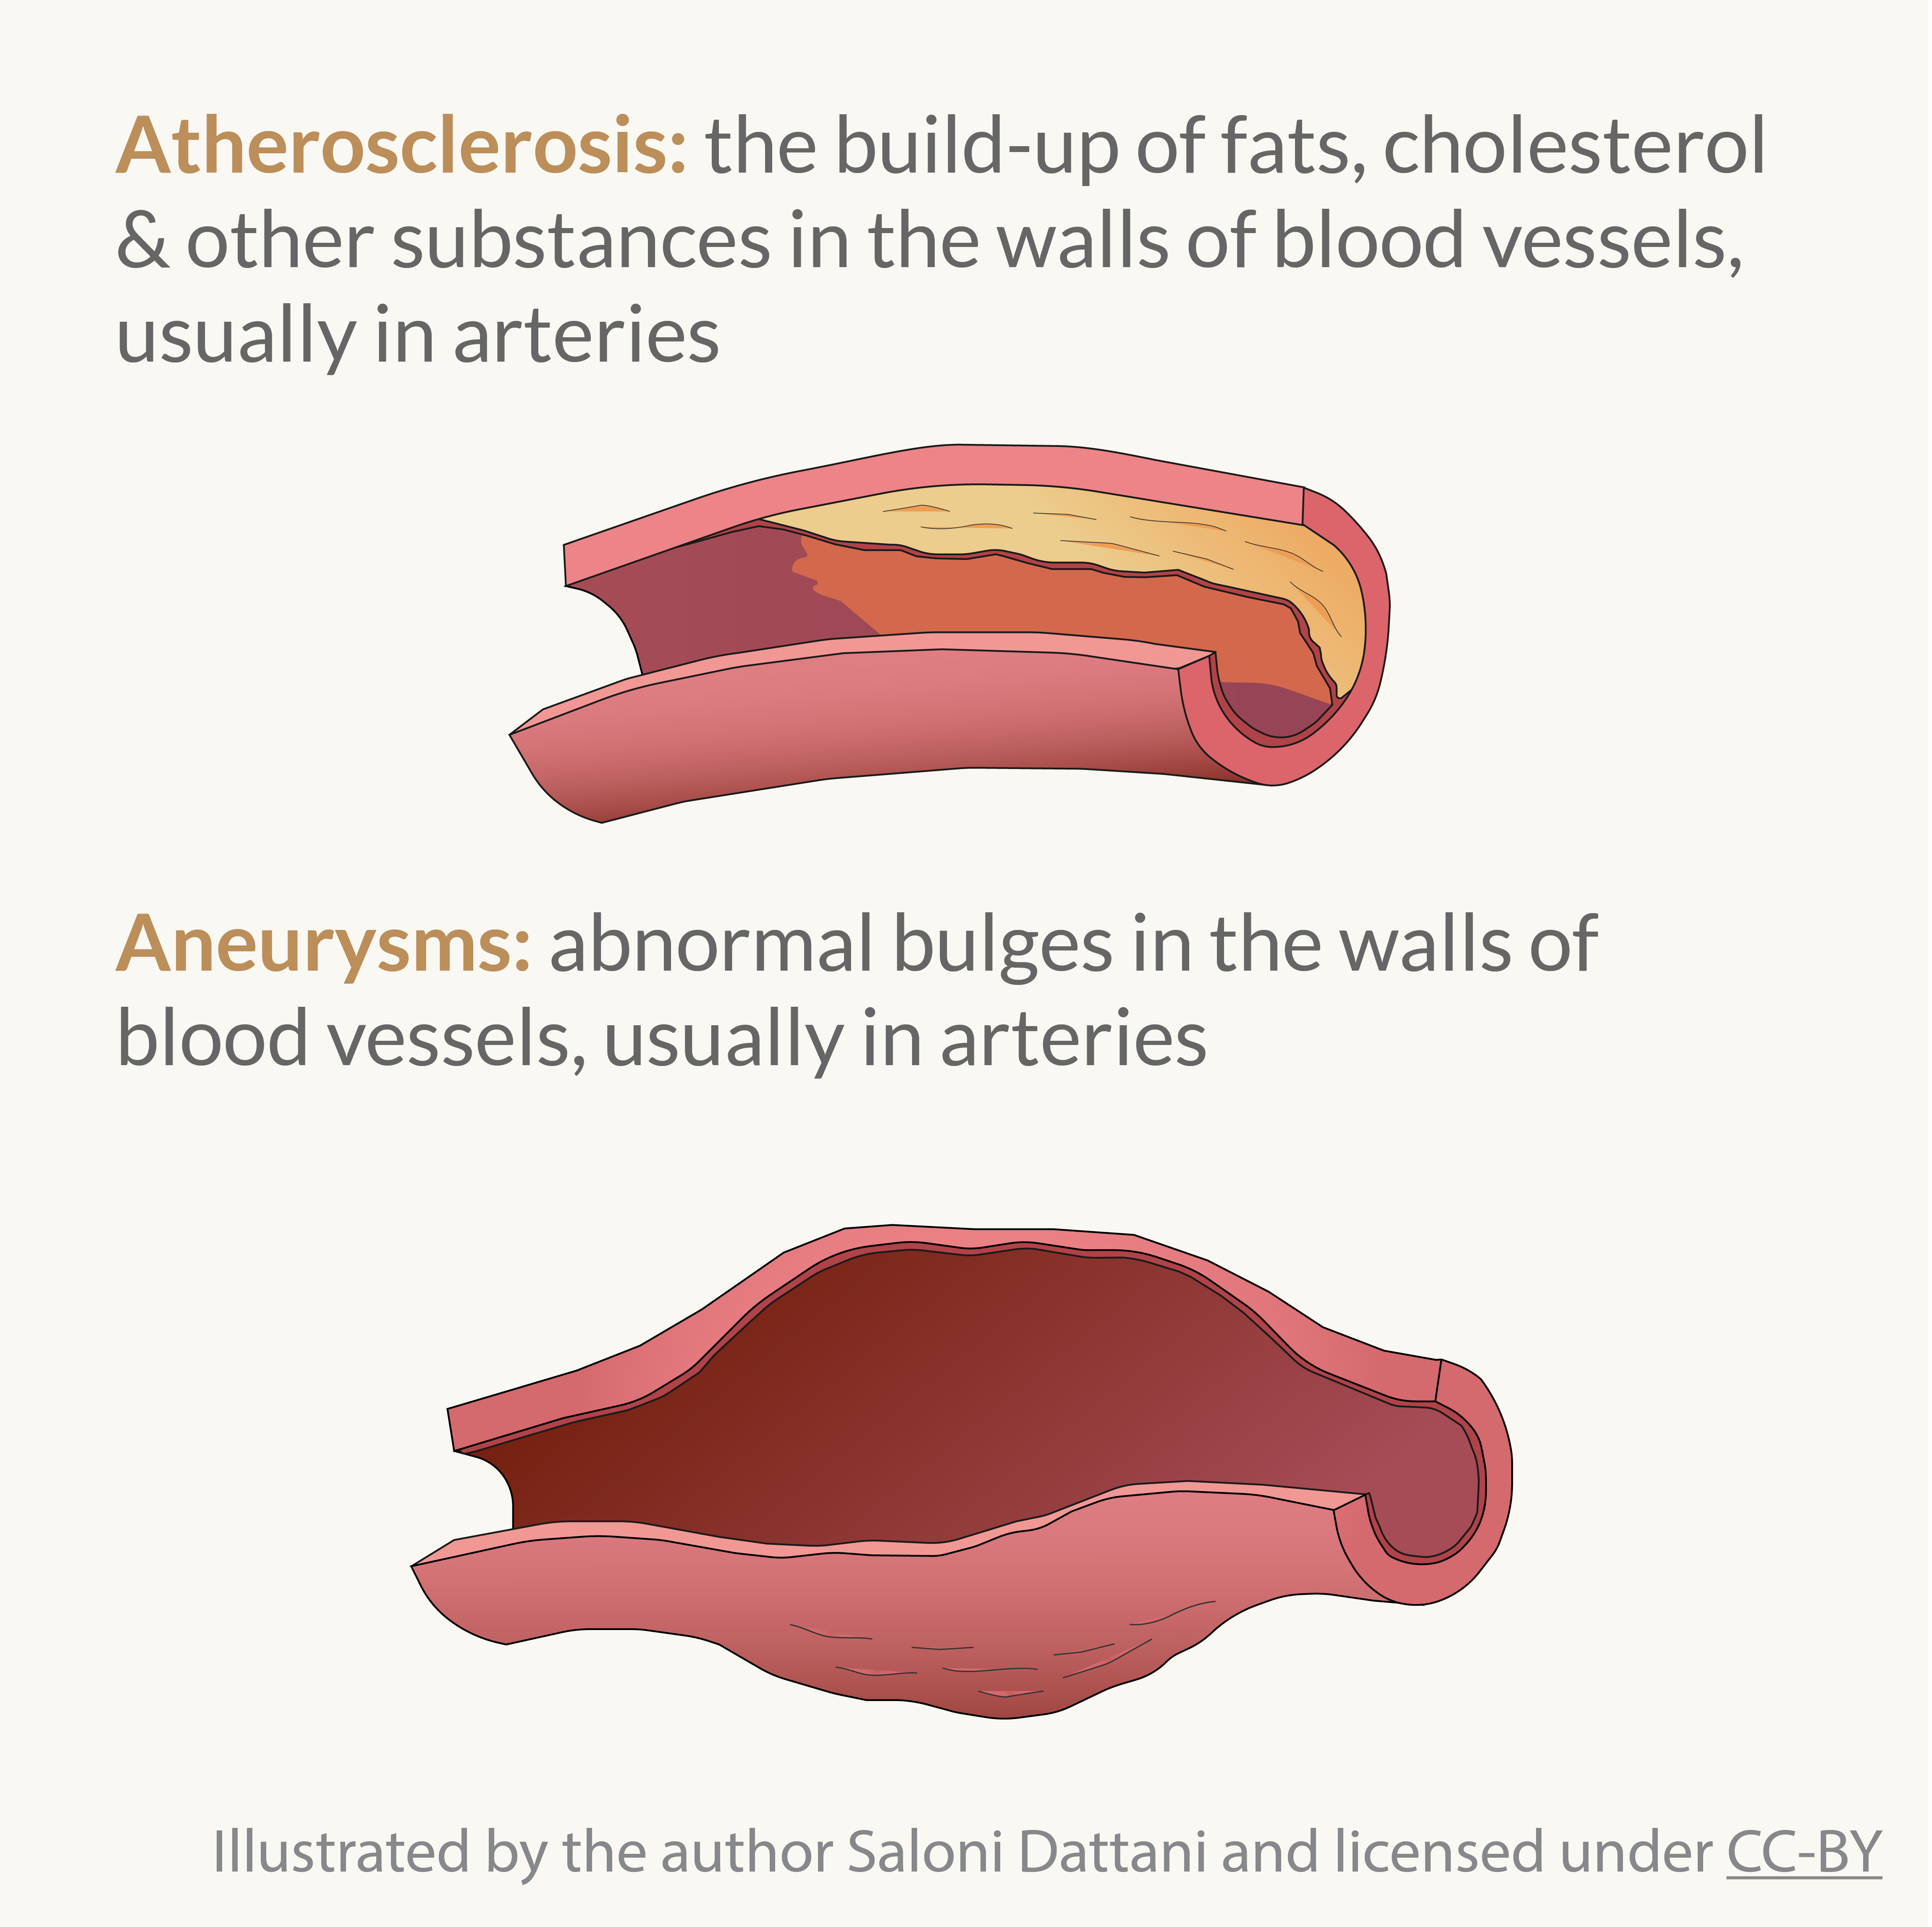 Illustration of atherosclerosis and aneurysm